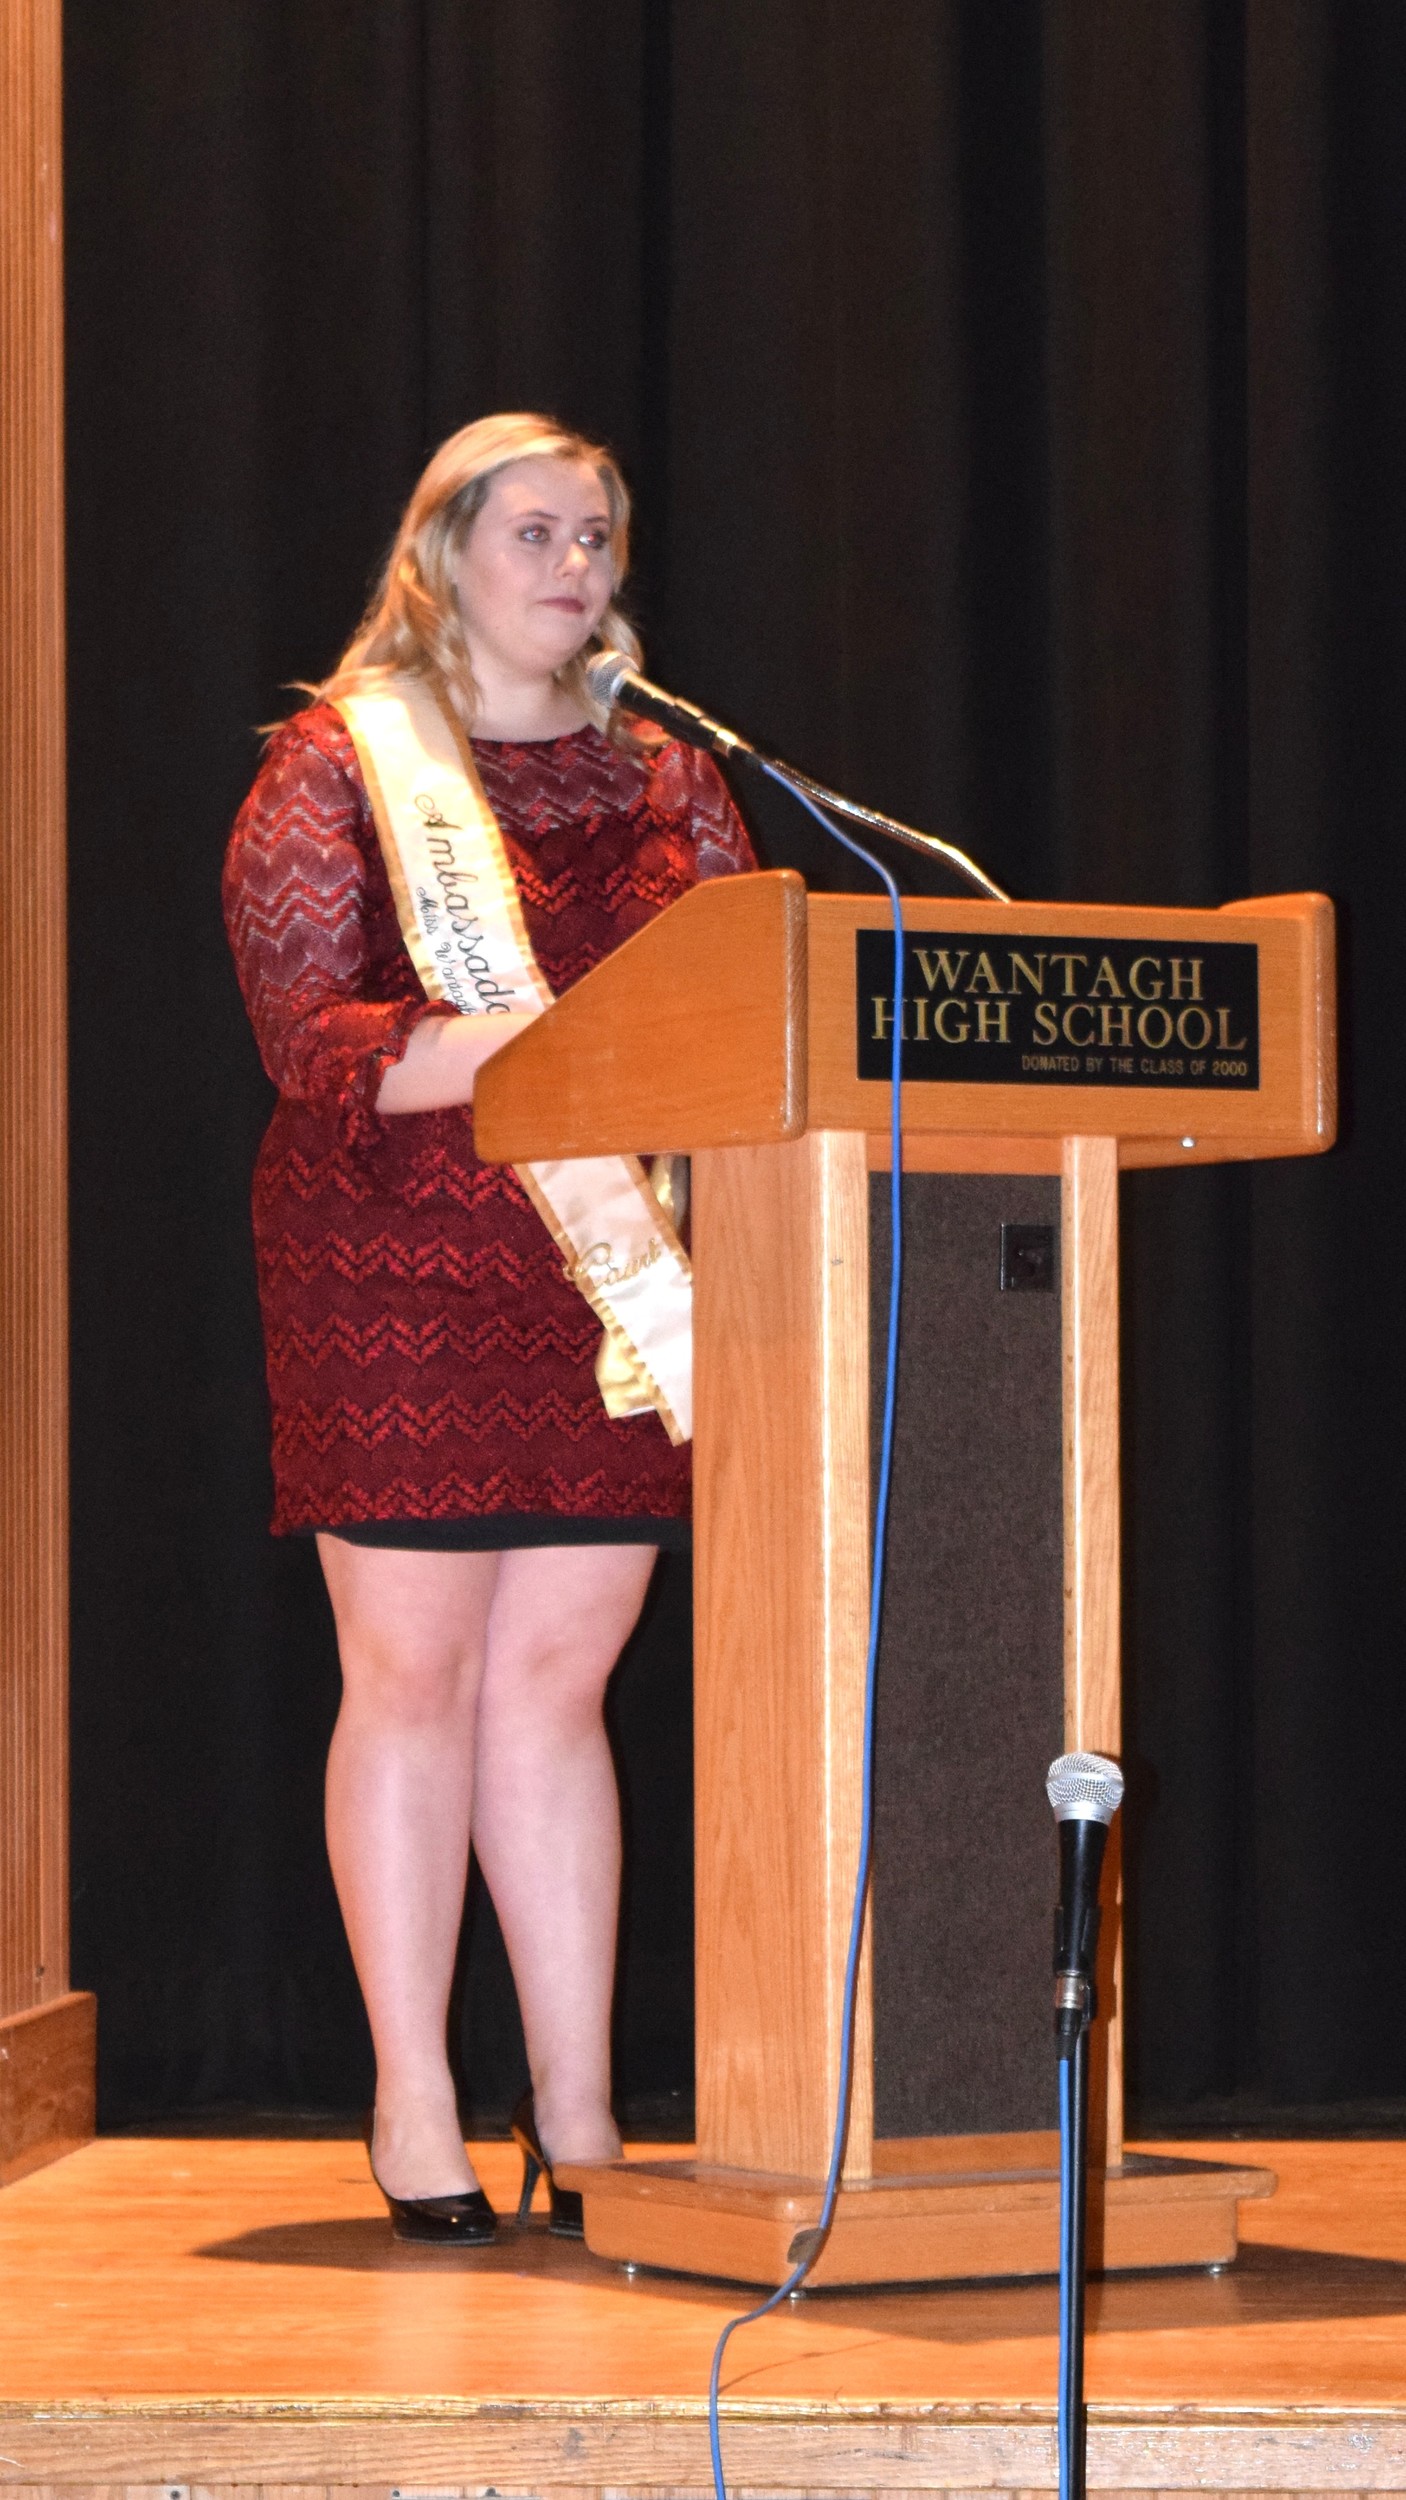 Miss Wantagh Ambassador Emma Carey held a presentation on breast cancer at Wantagh High School on May 18.